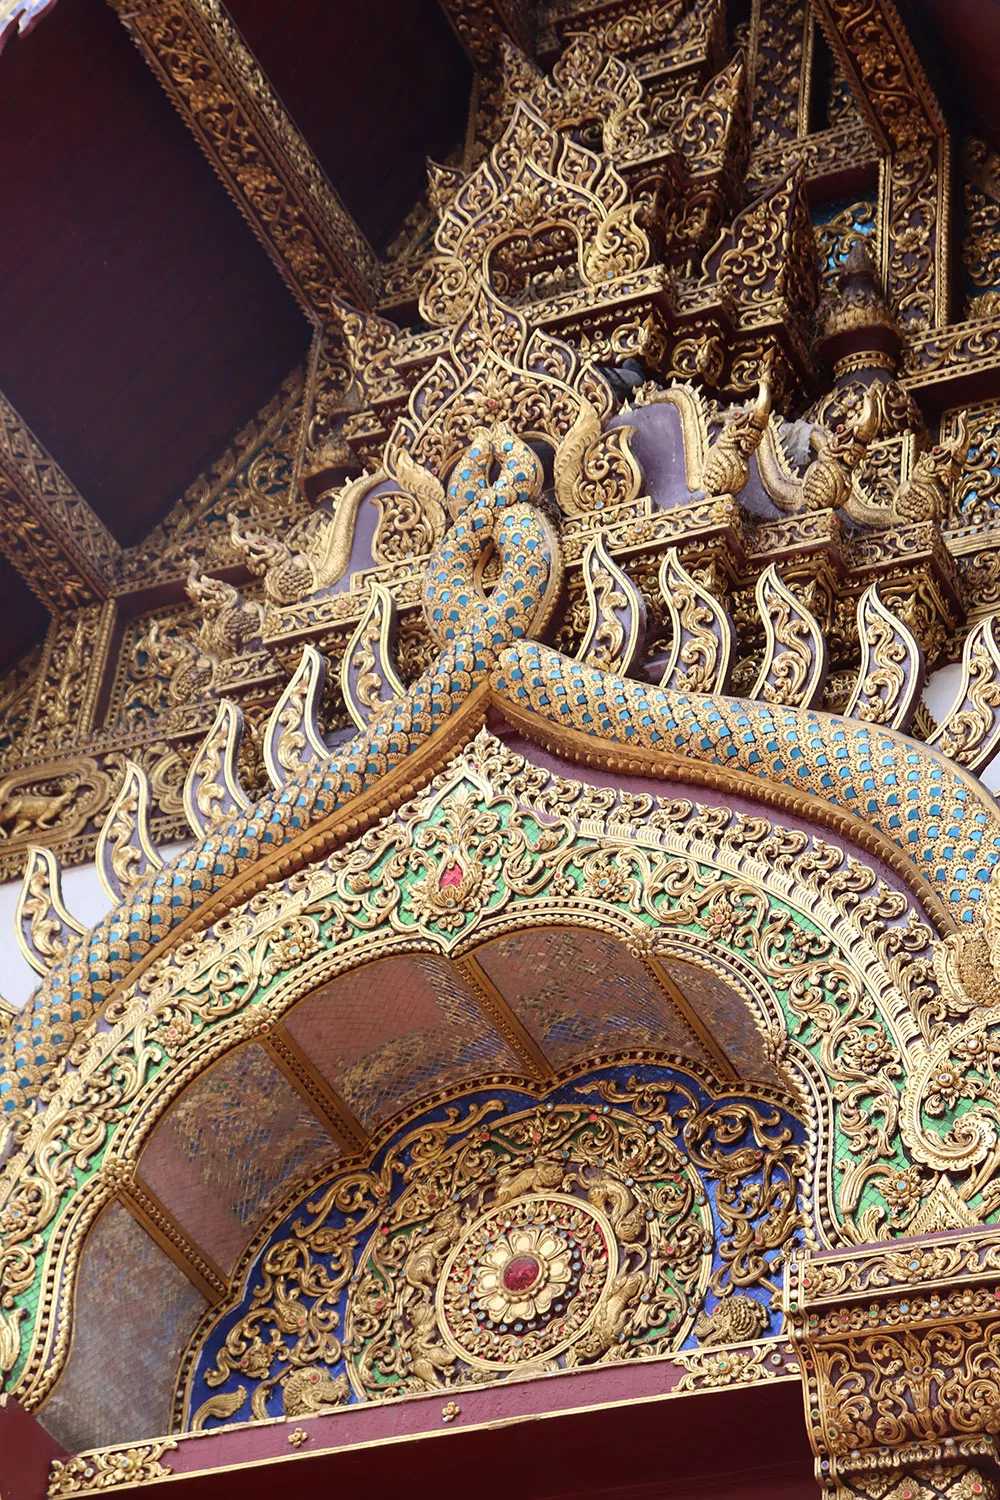 Wat Rajamontean, Chiang Mai